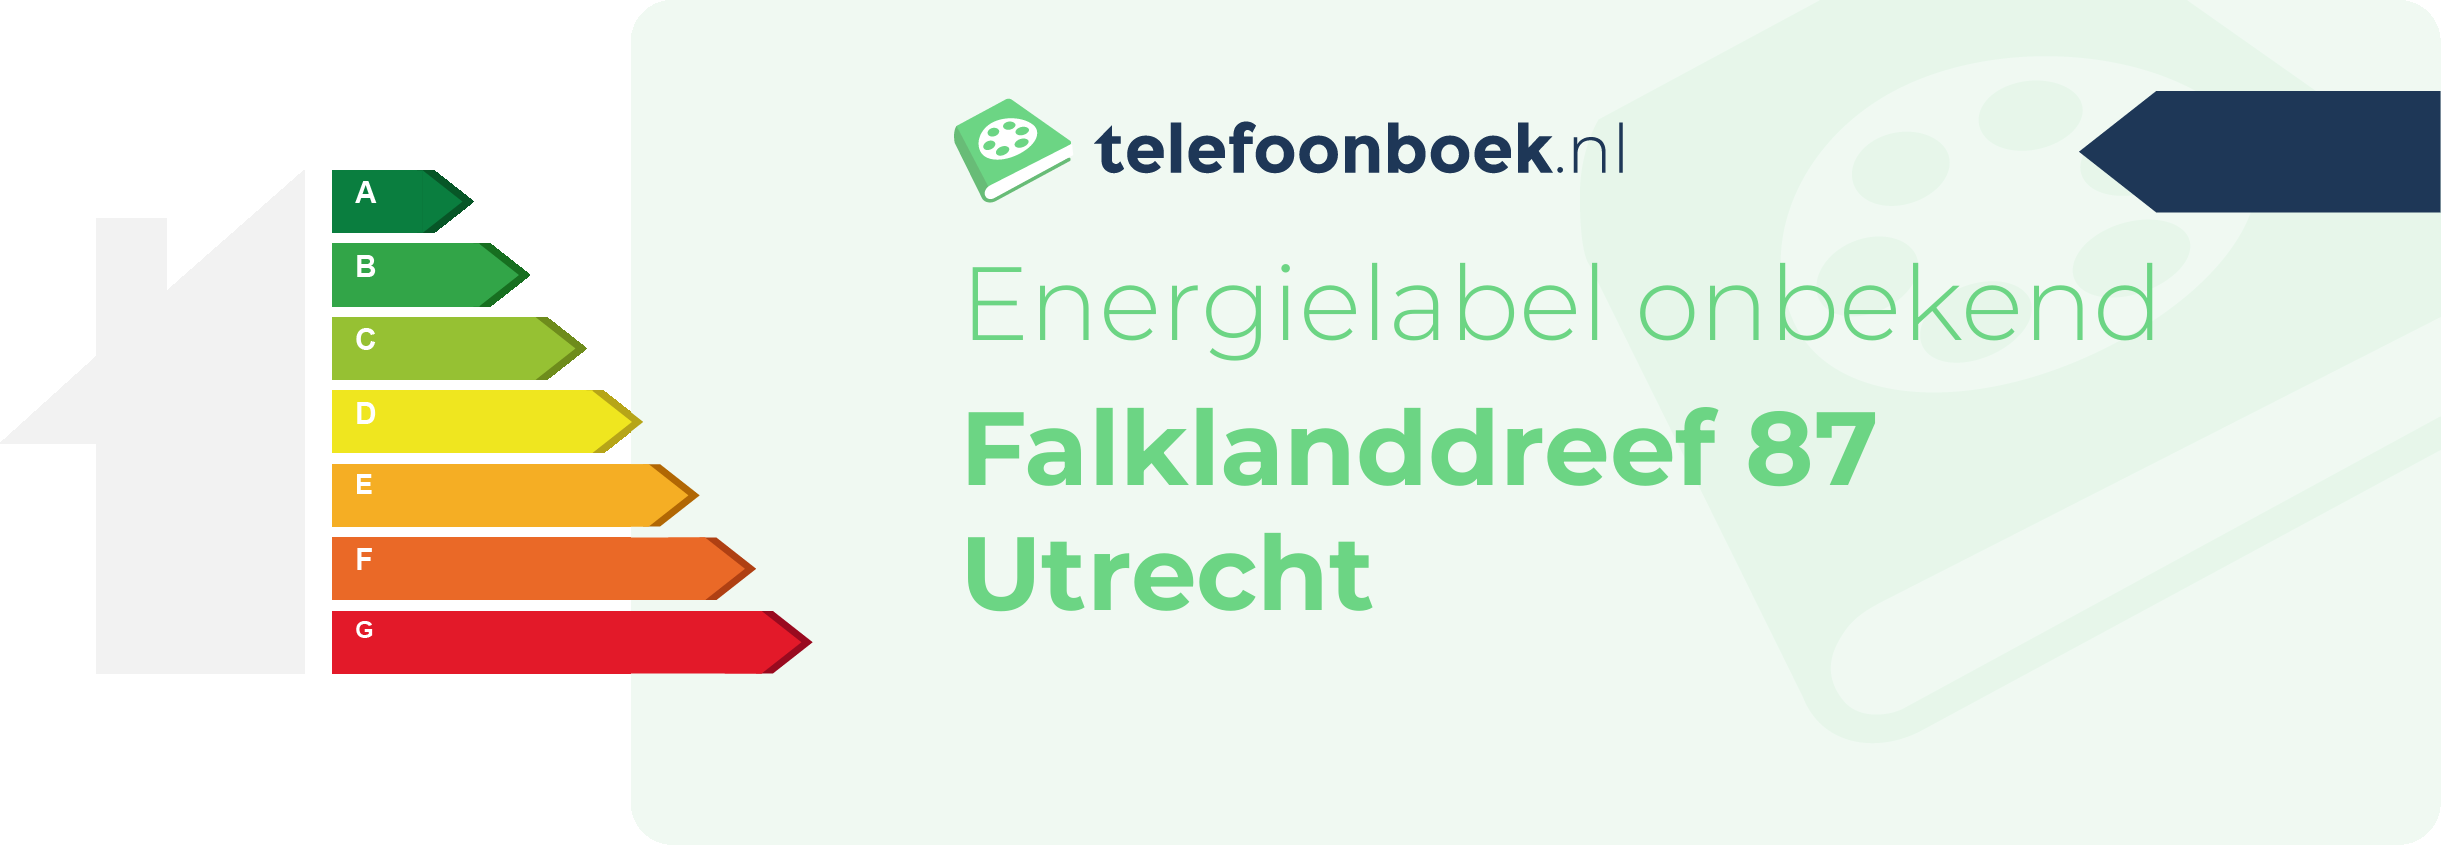 Energielabel Falklanddreef 87 Utrecht